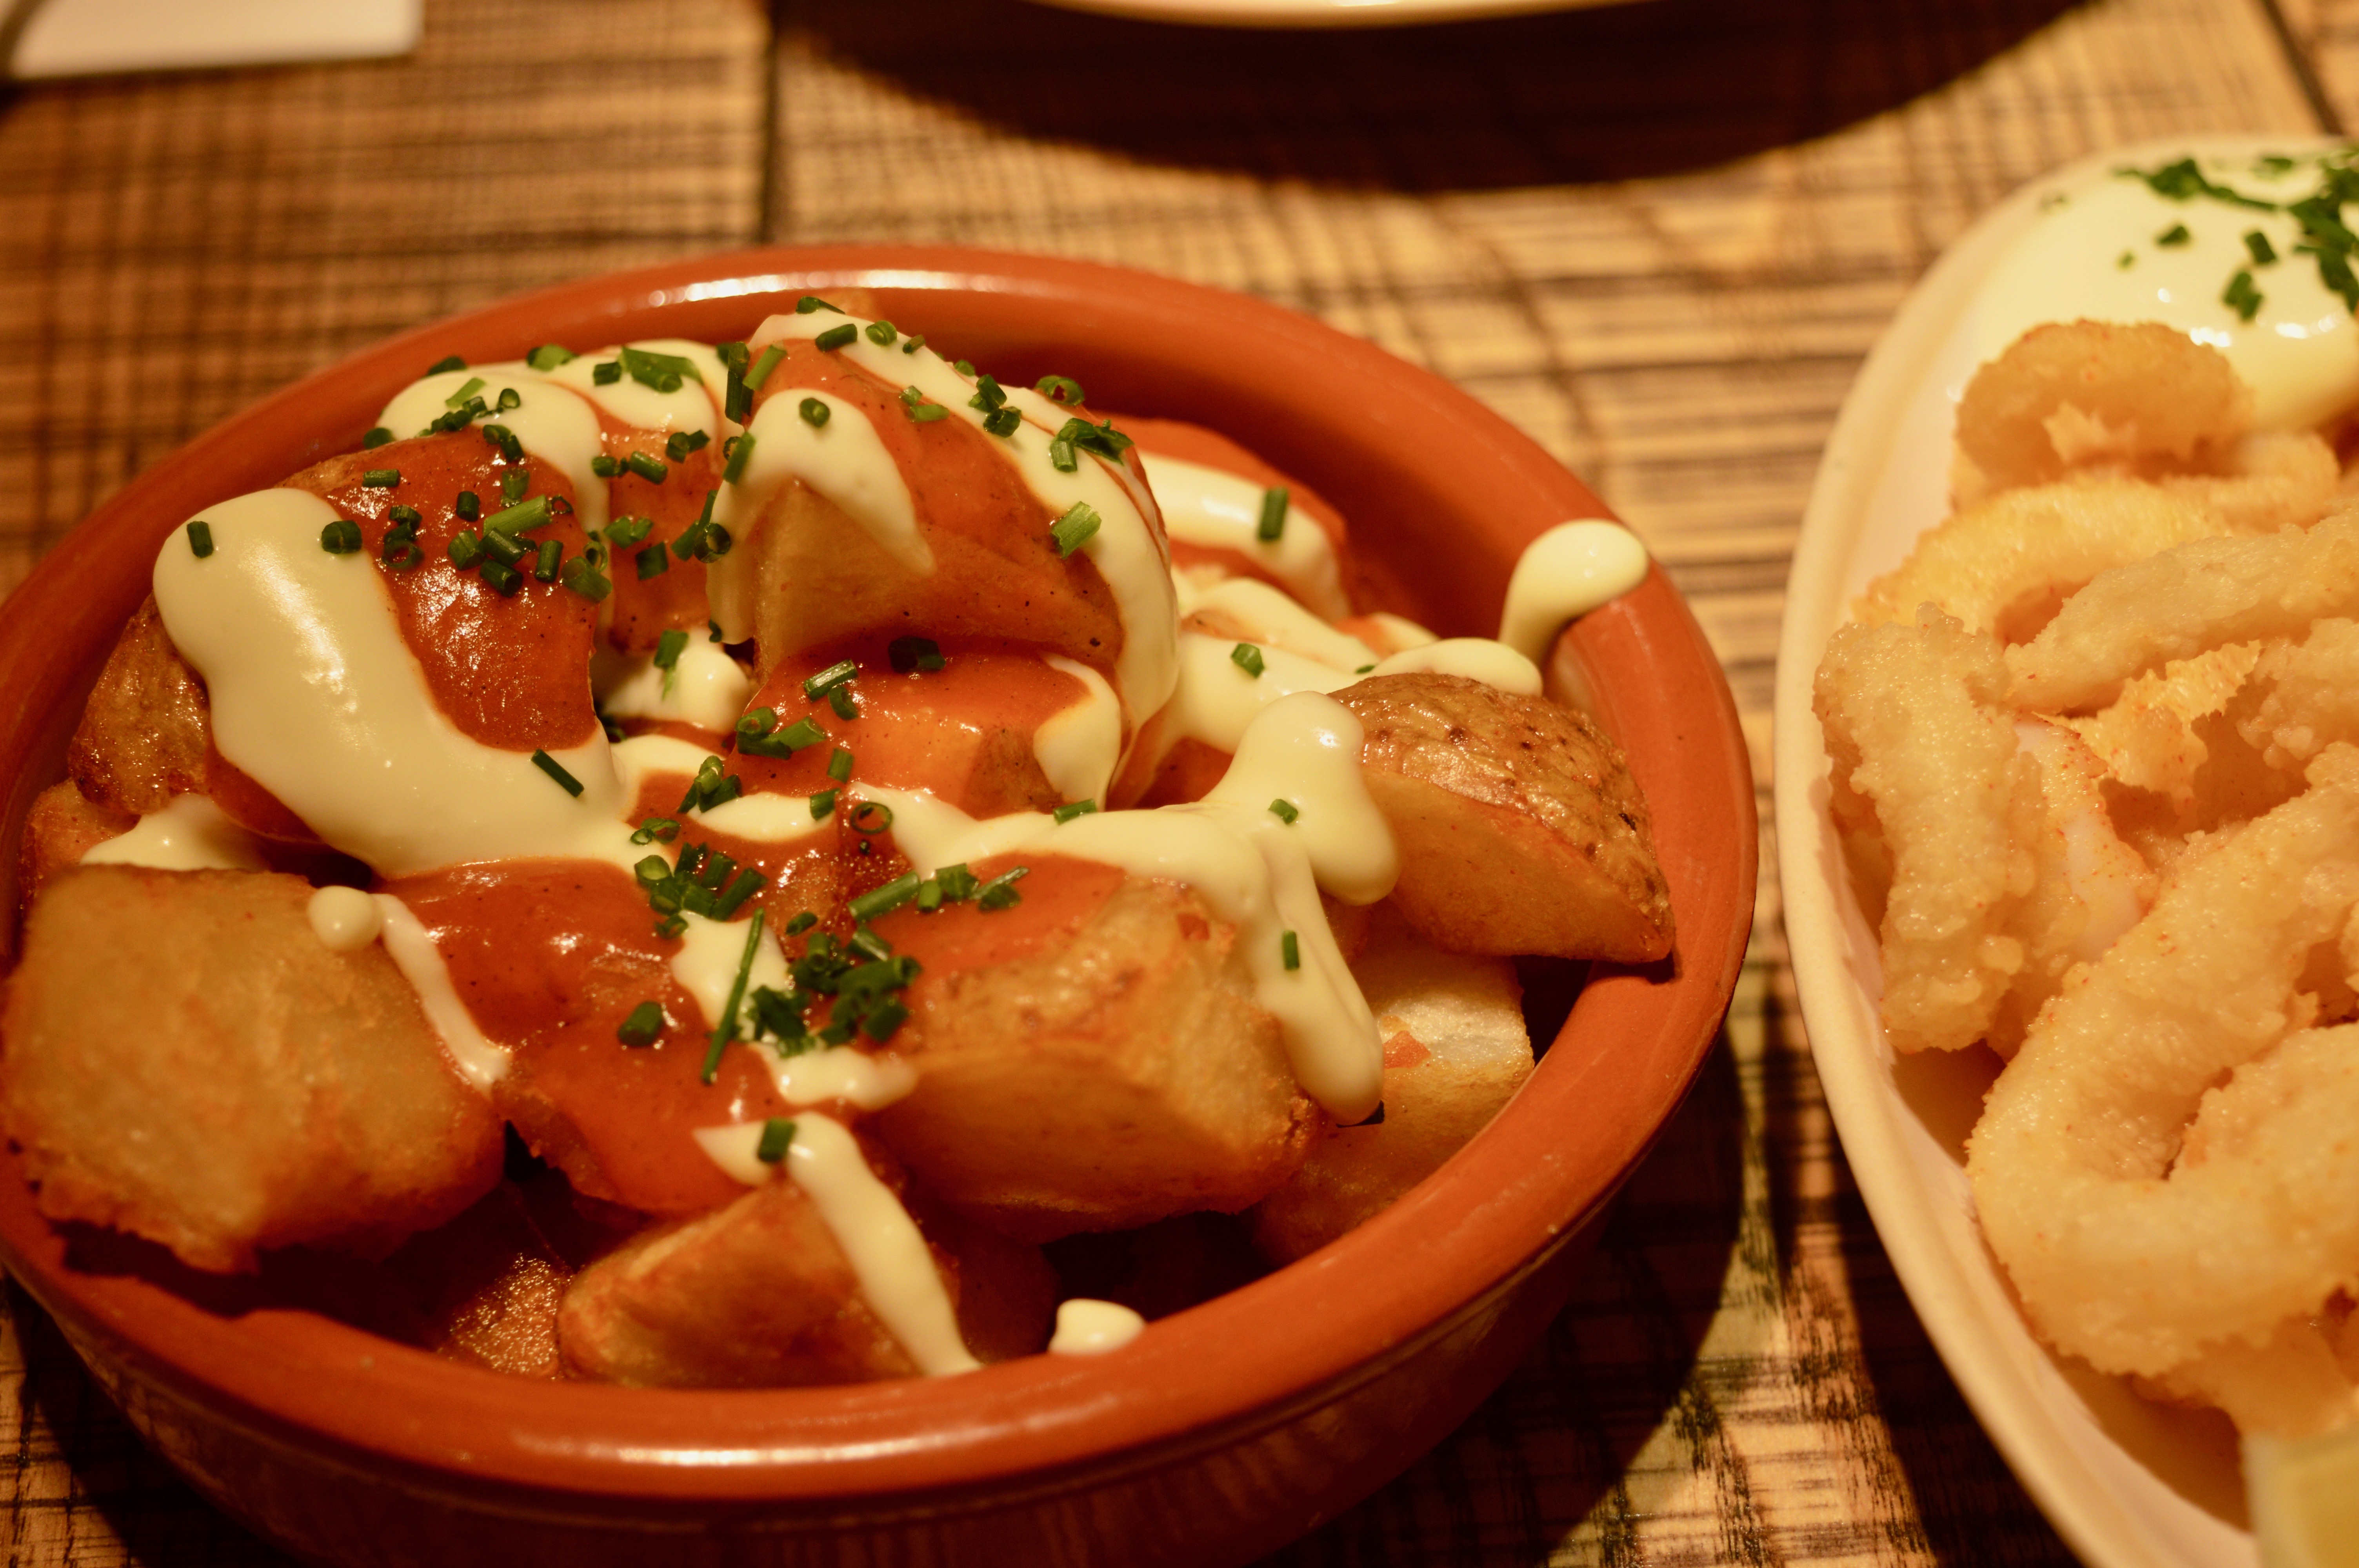 potatas-bravas-tapas-revolution-food-review-newcastle-omar-allibhoy-elle-blonde-luxury-lifestyle-destination-blog